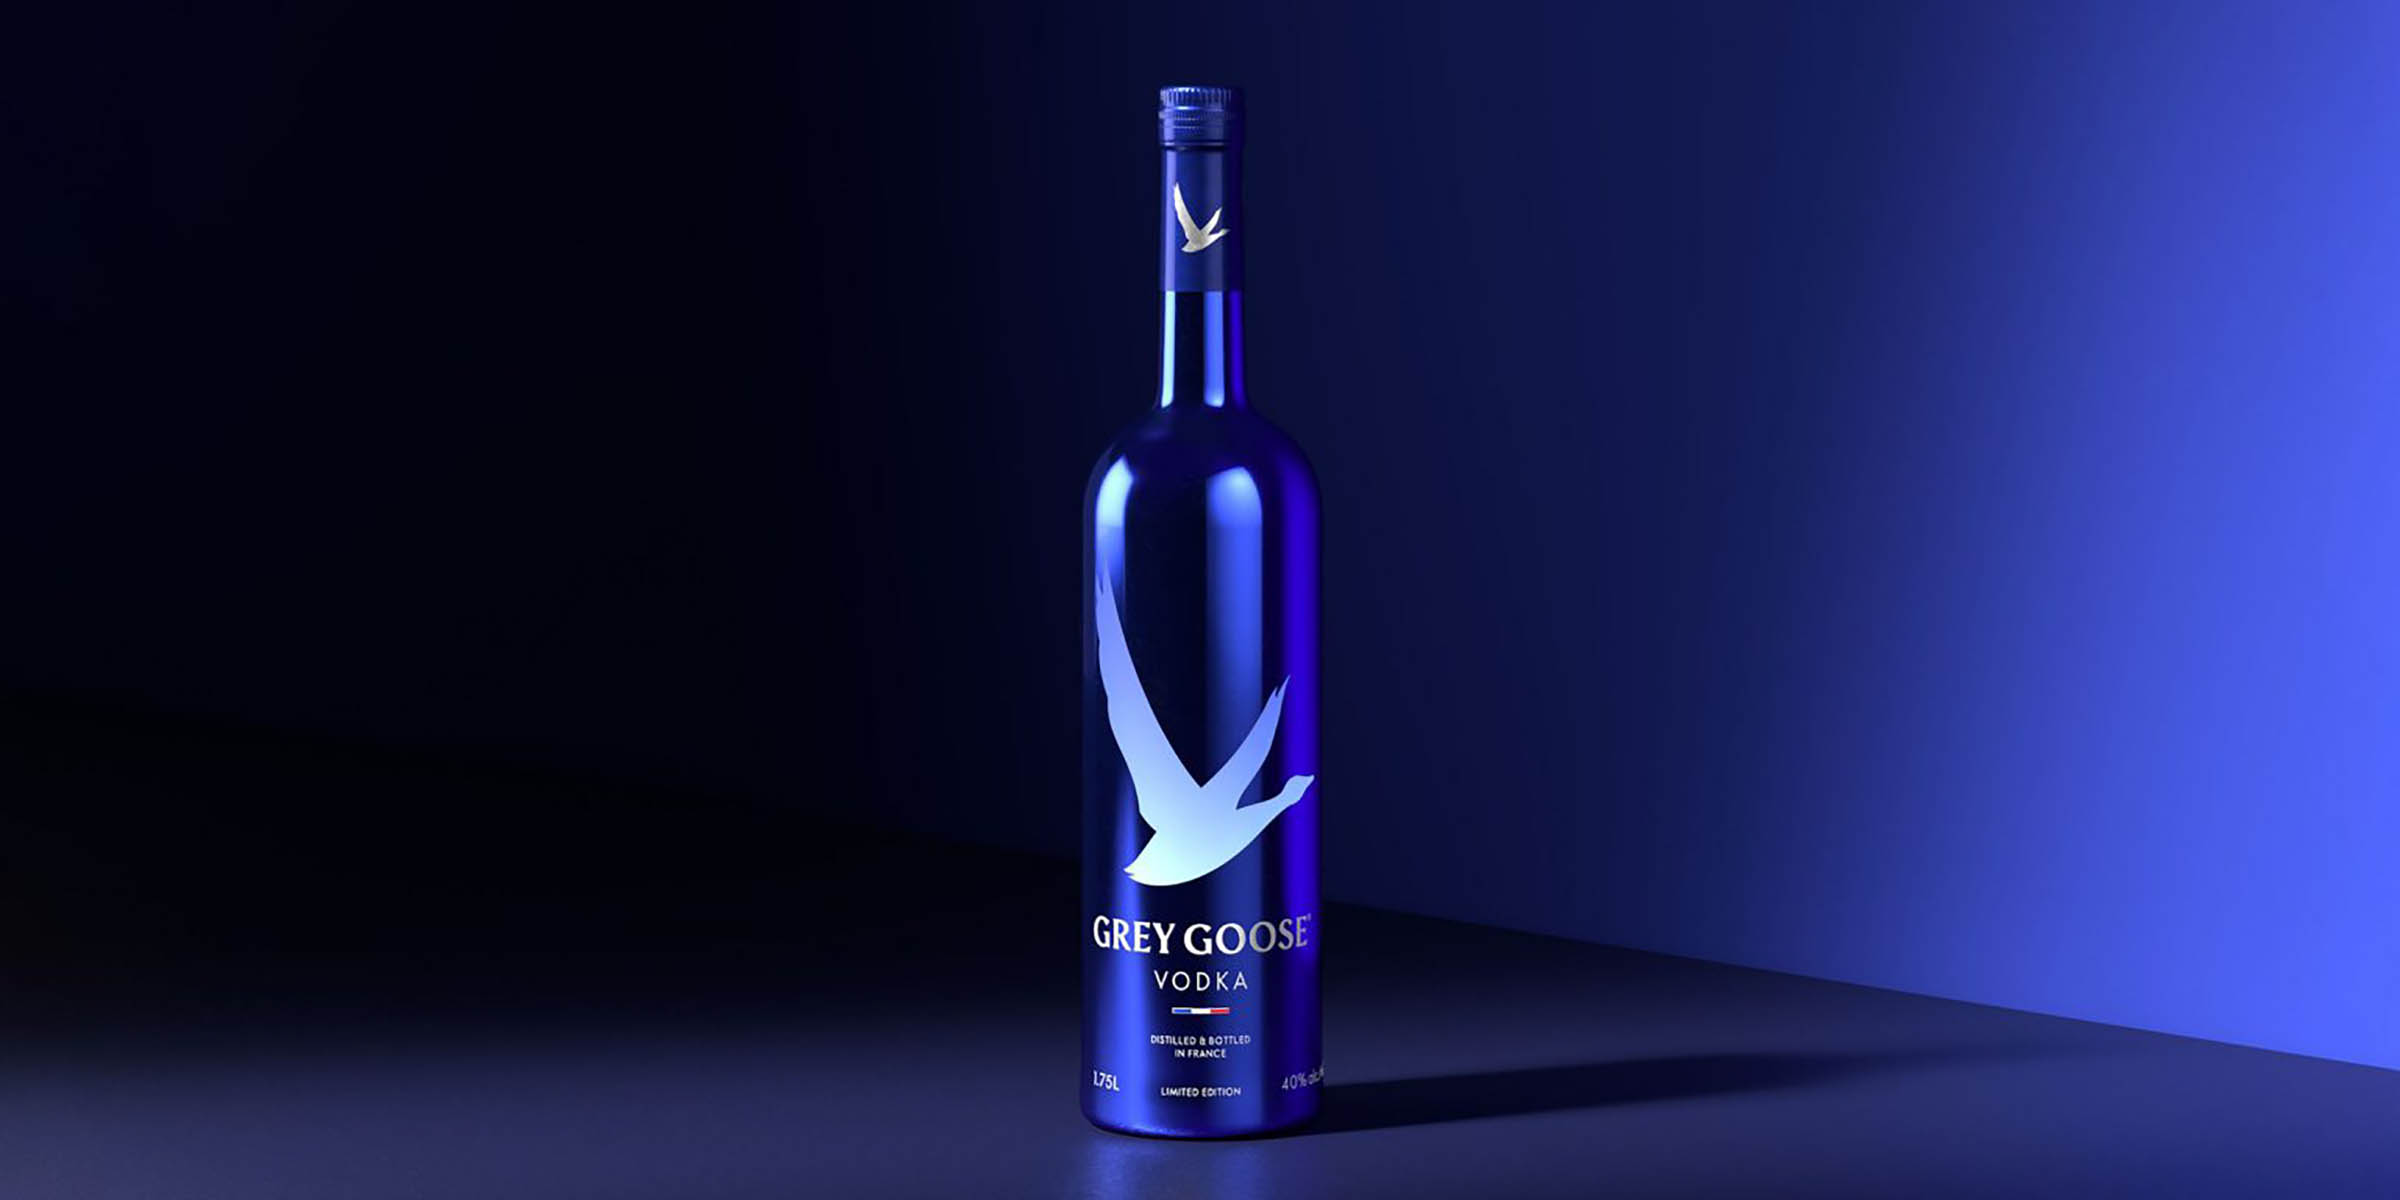 https://cdn.luxe.digital/media/20230118134742/grey-goose-vodka-bottle-price-size-review-luxe-digital-1.jpg